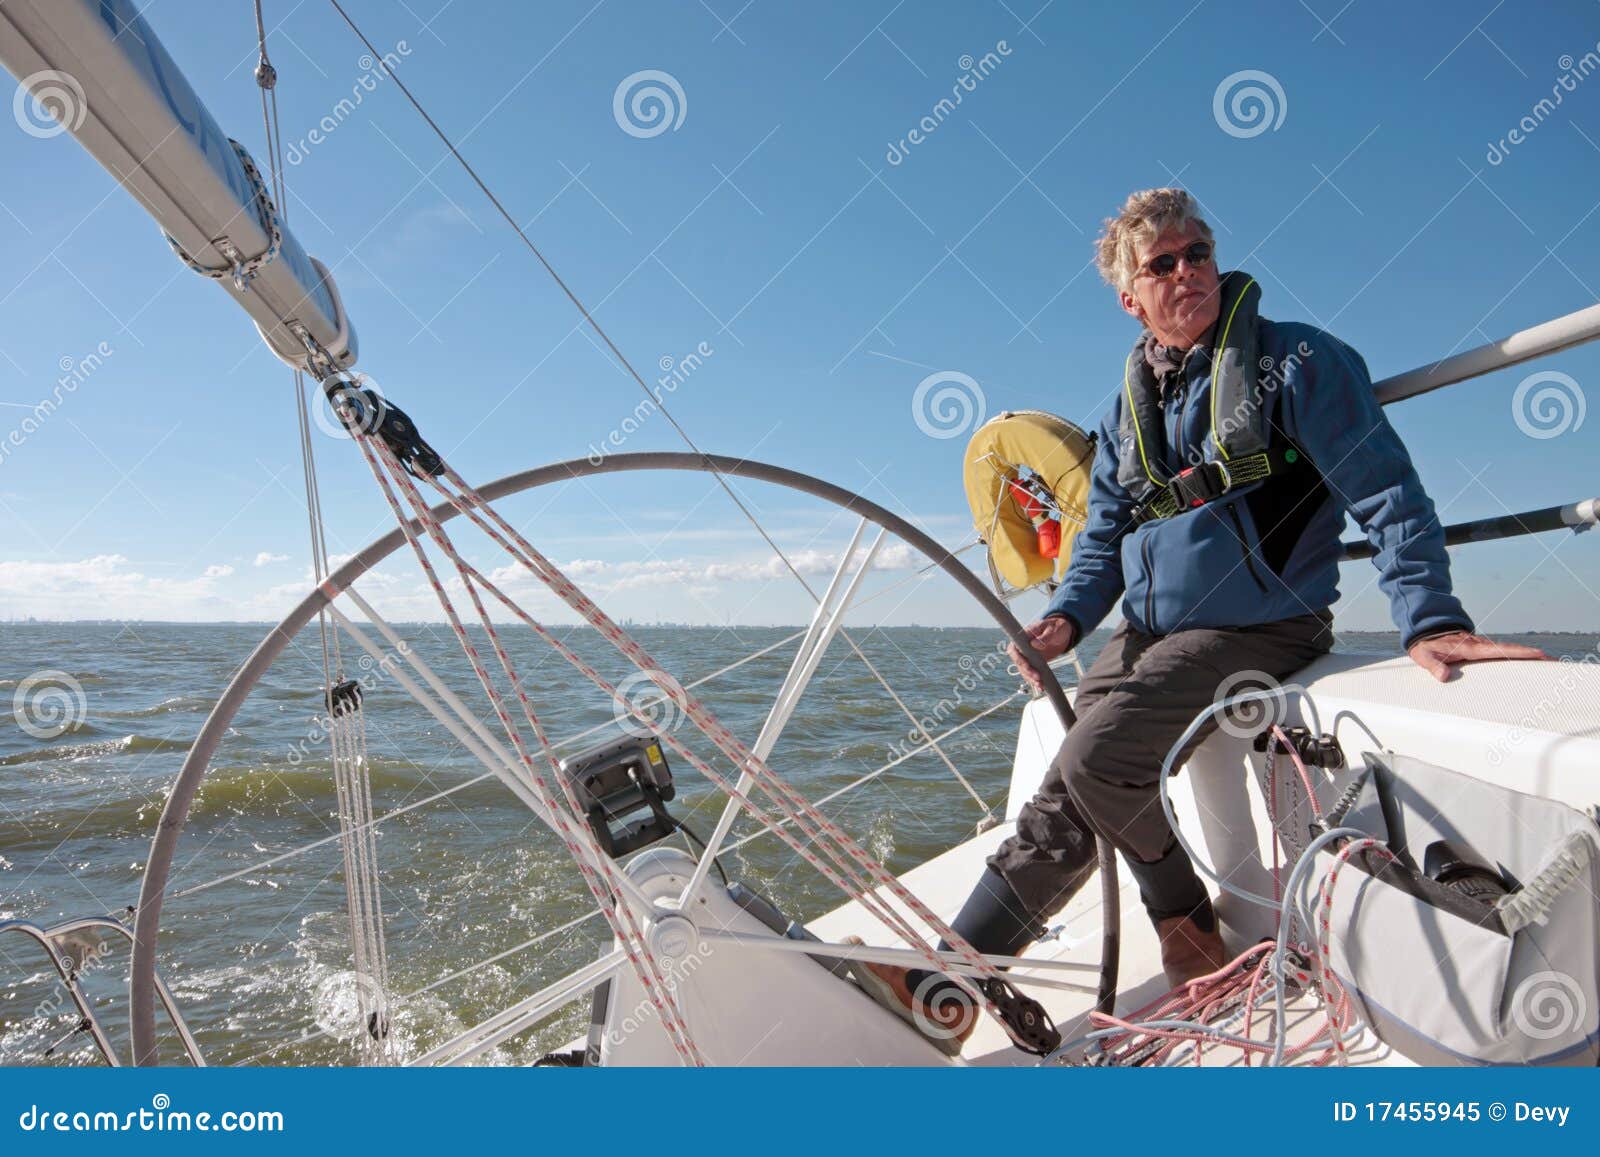 sailing on the ijsselmeer in the netherlands